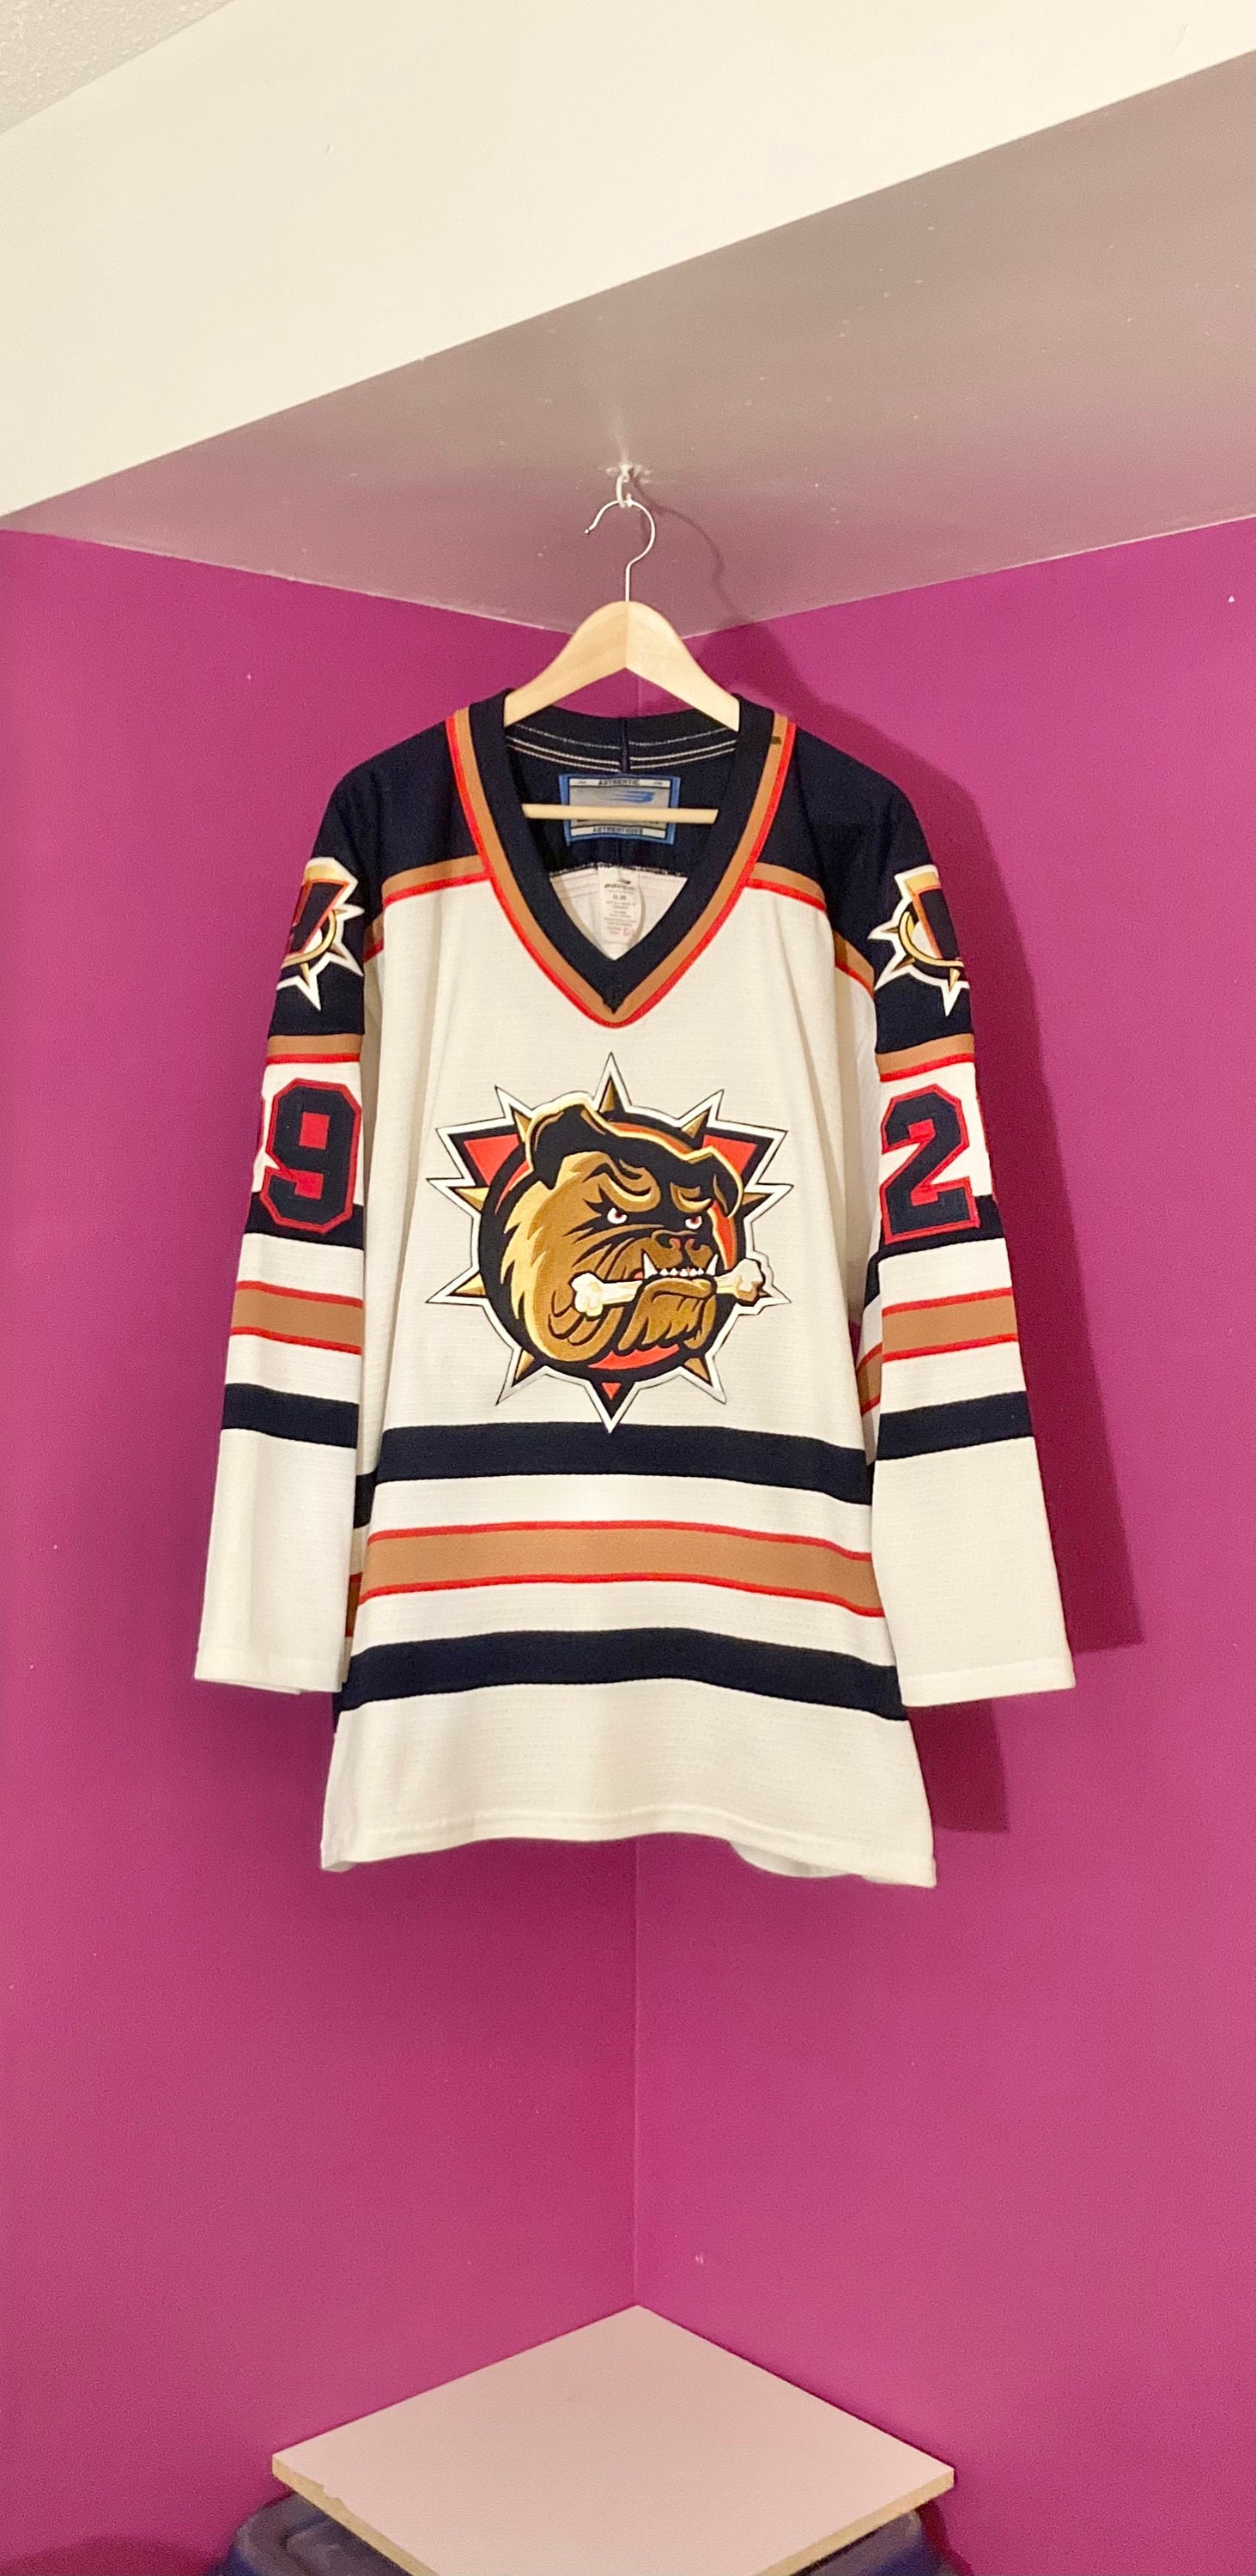 Hamilton Bulldogs Road Uniform - American Hockey League (AHL